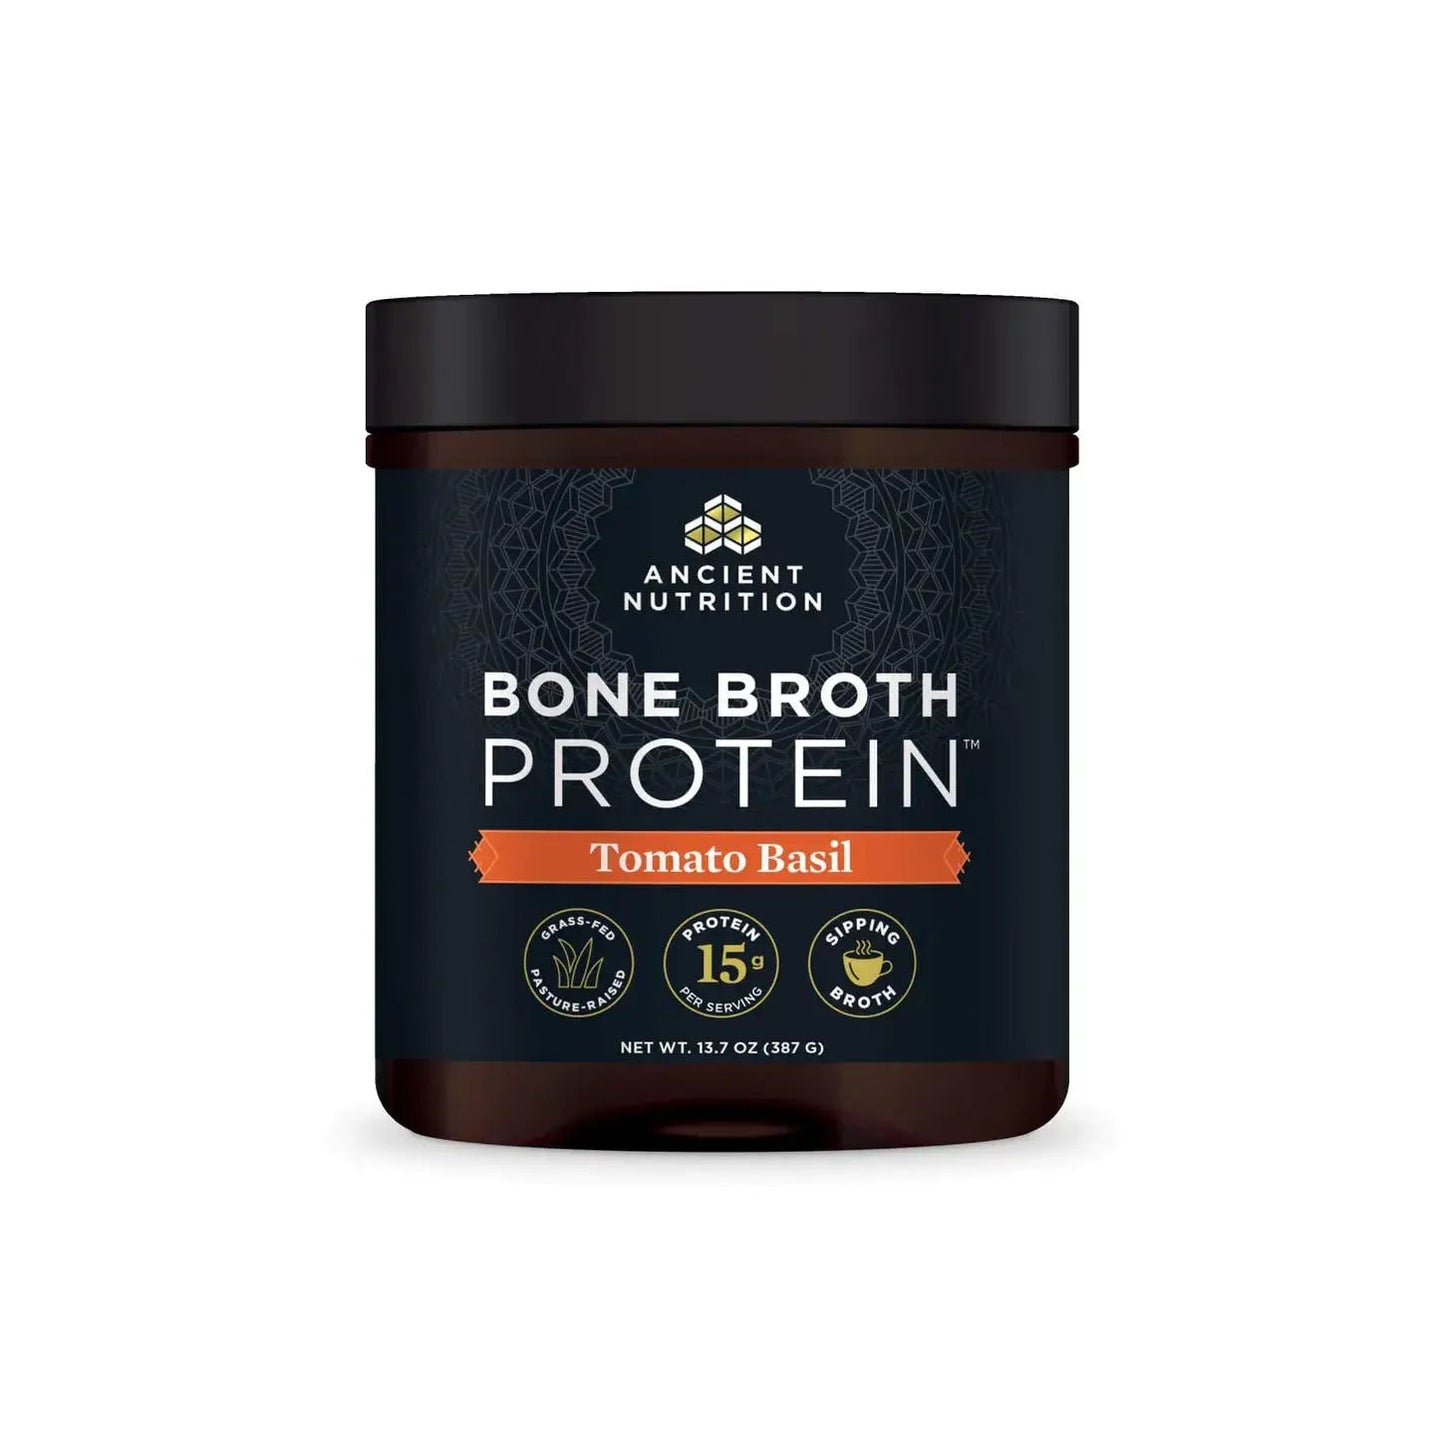 Bone Broth Protein: Tomato Basil - Echo Market